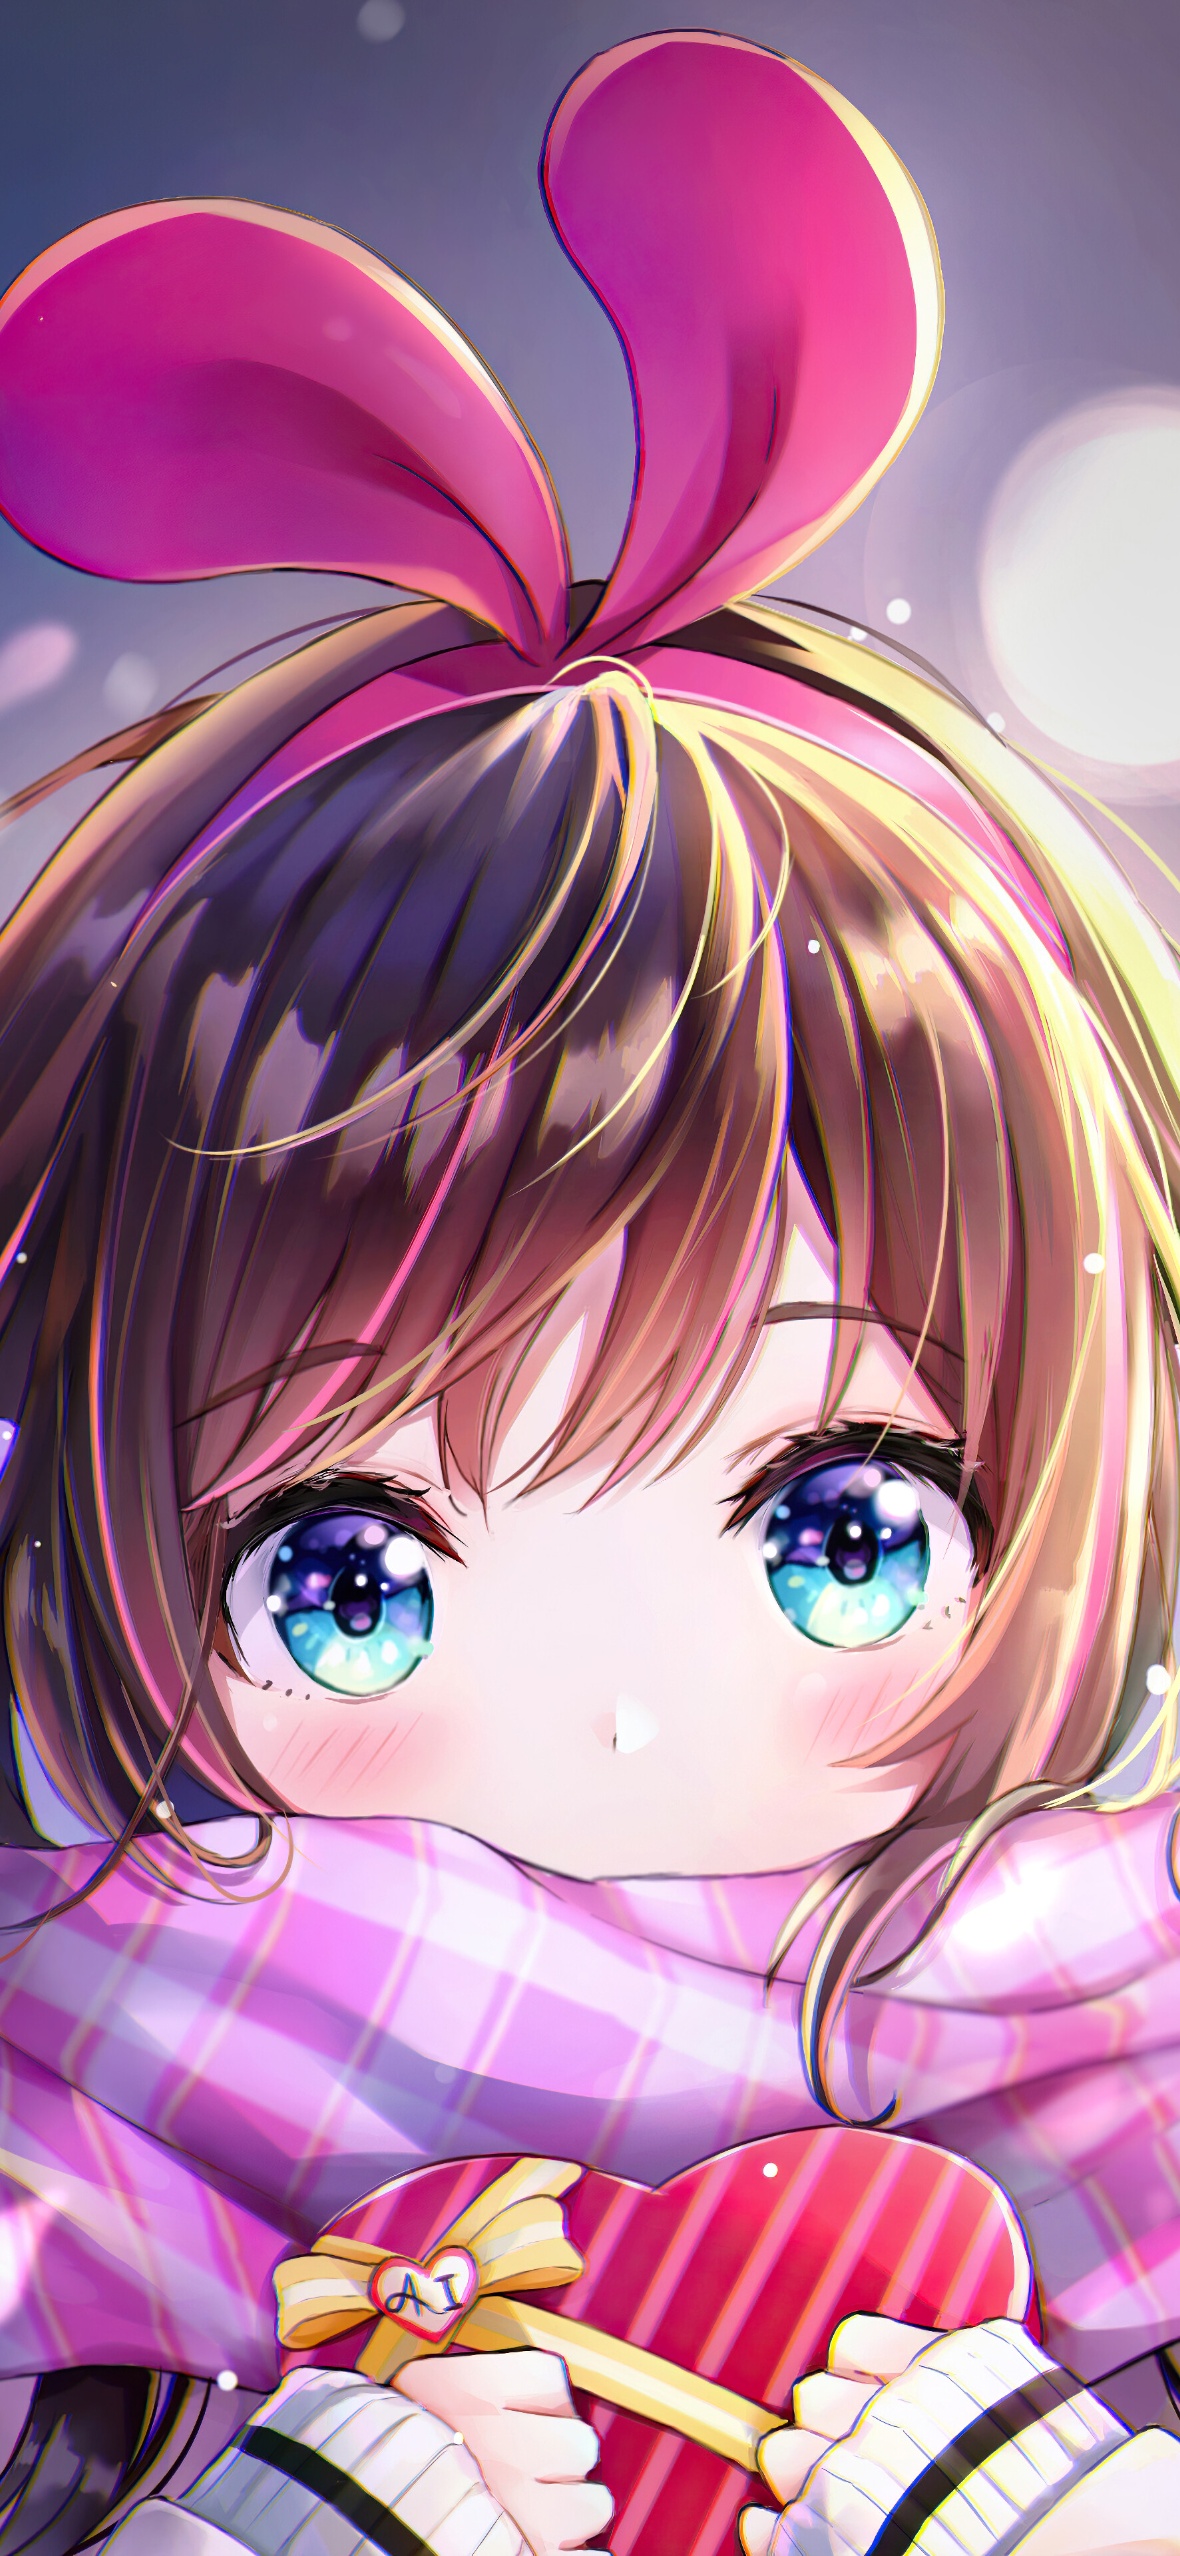 Top Best Cute Anime Girl iPhone Wallpaper Hq